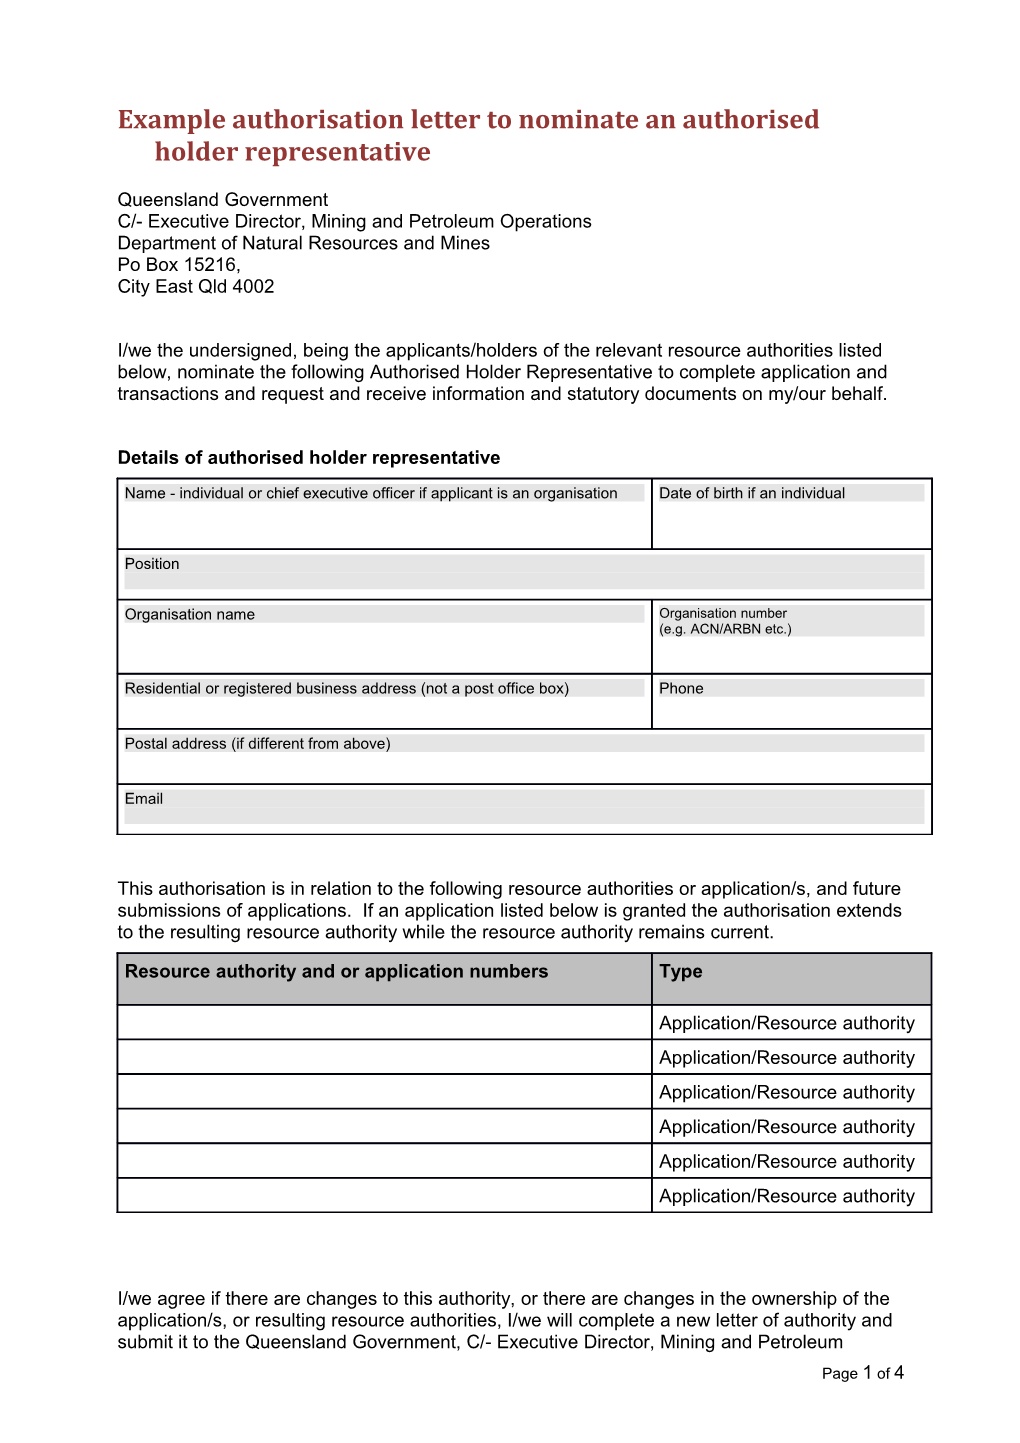 Authorisation Letter to Nominate an Authorised Holder Representative